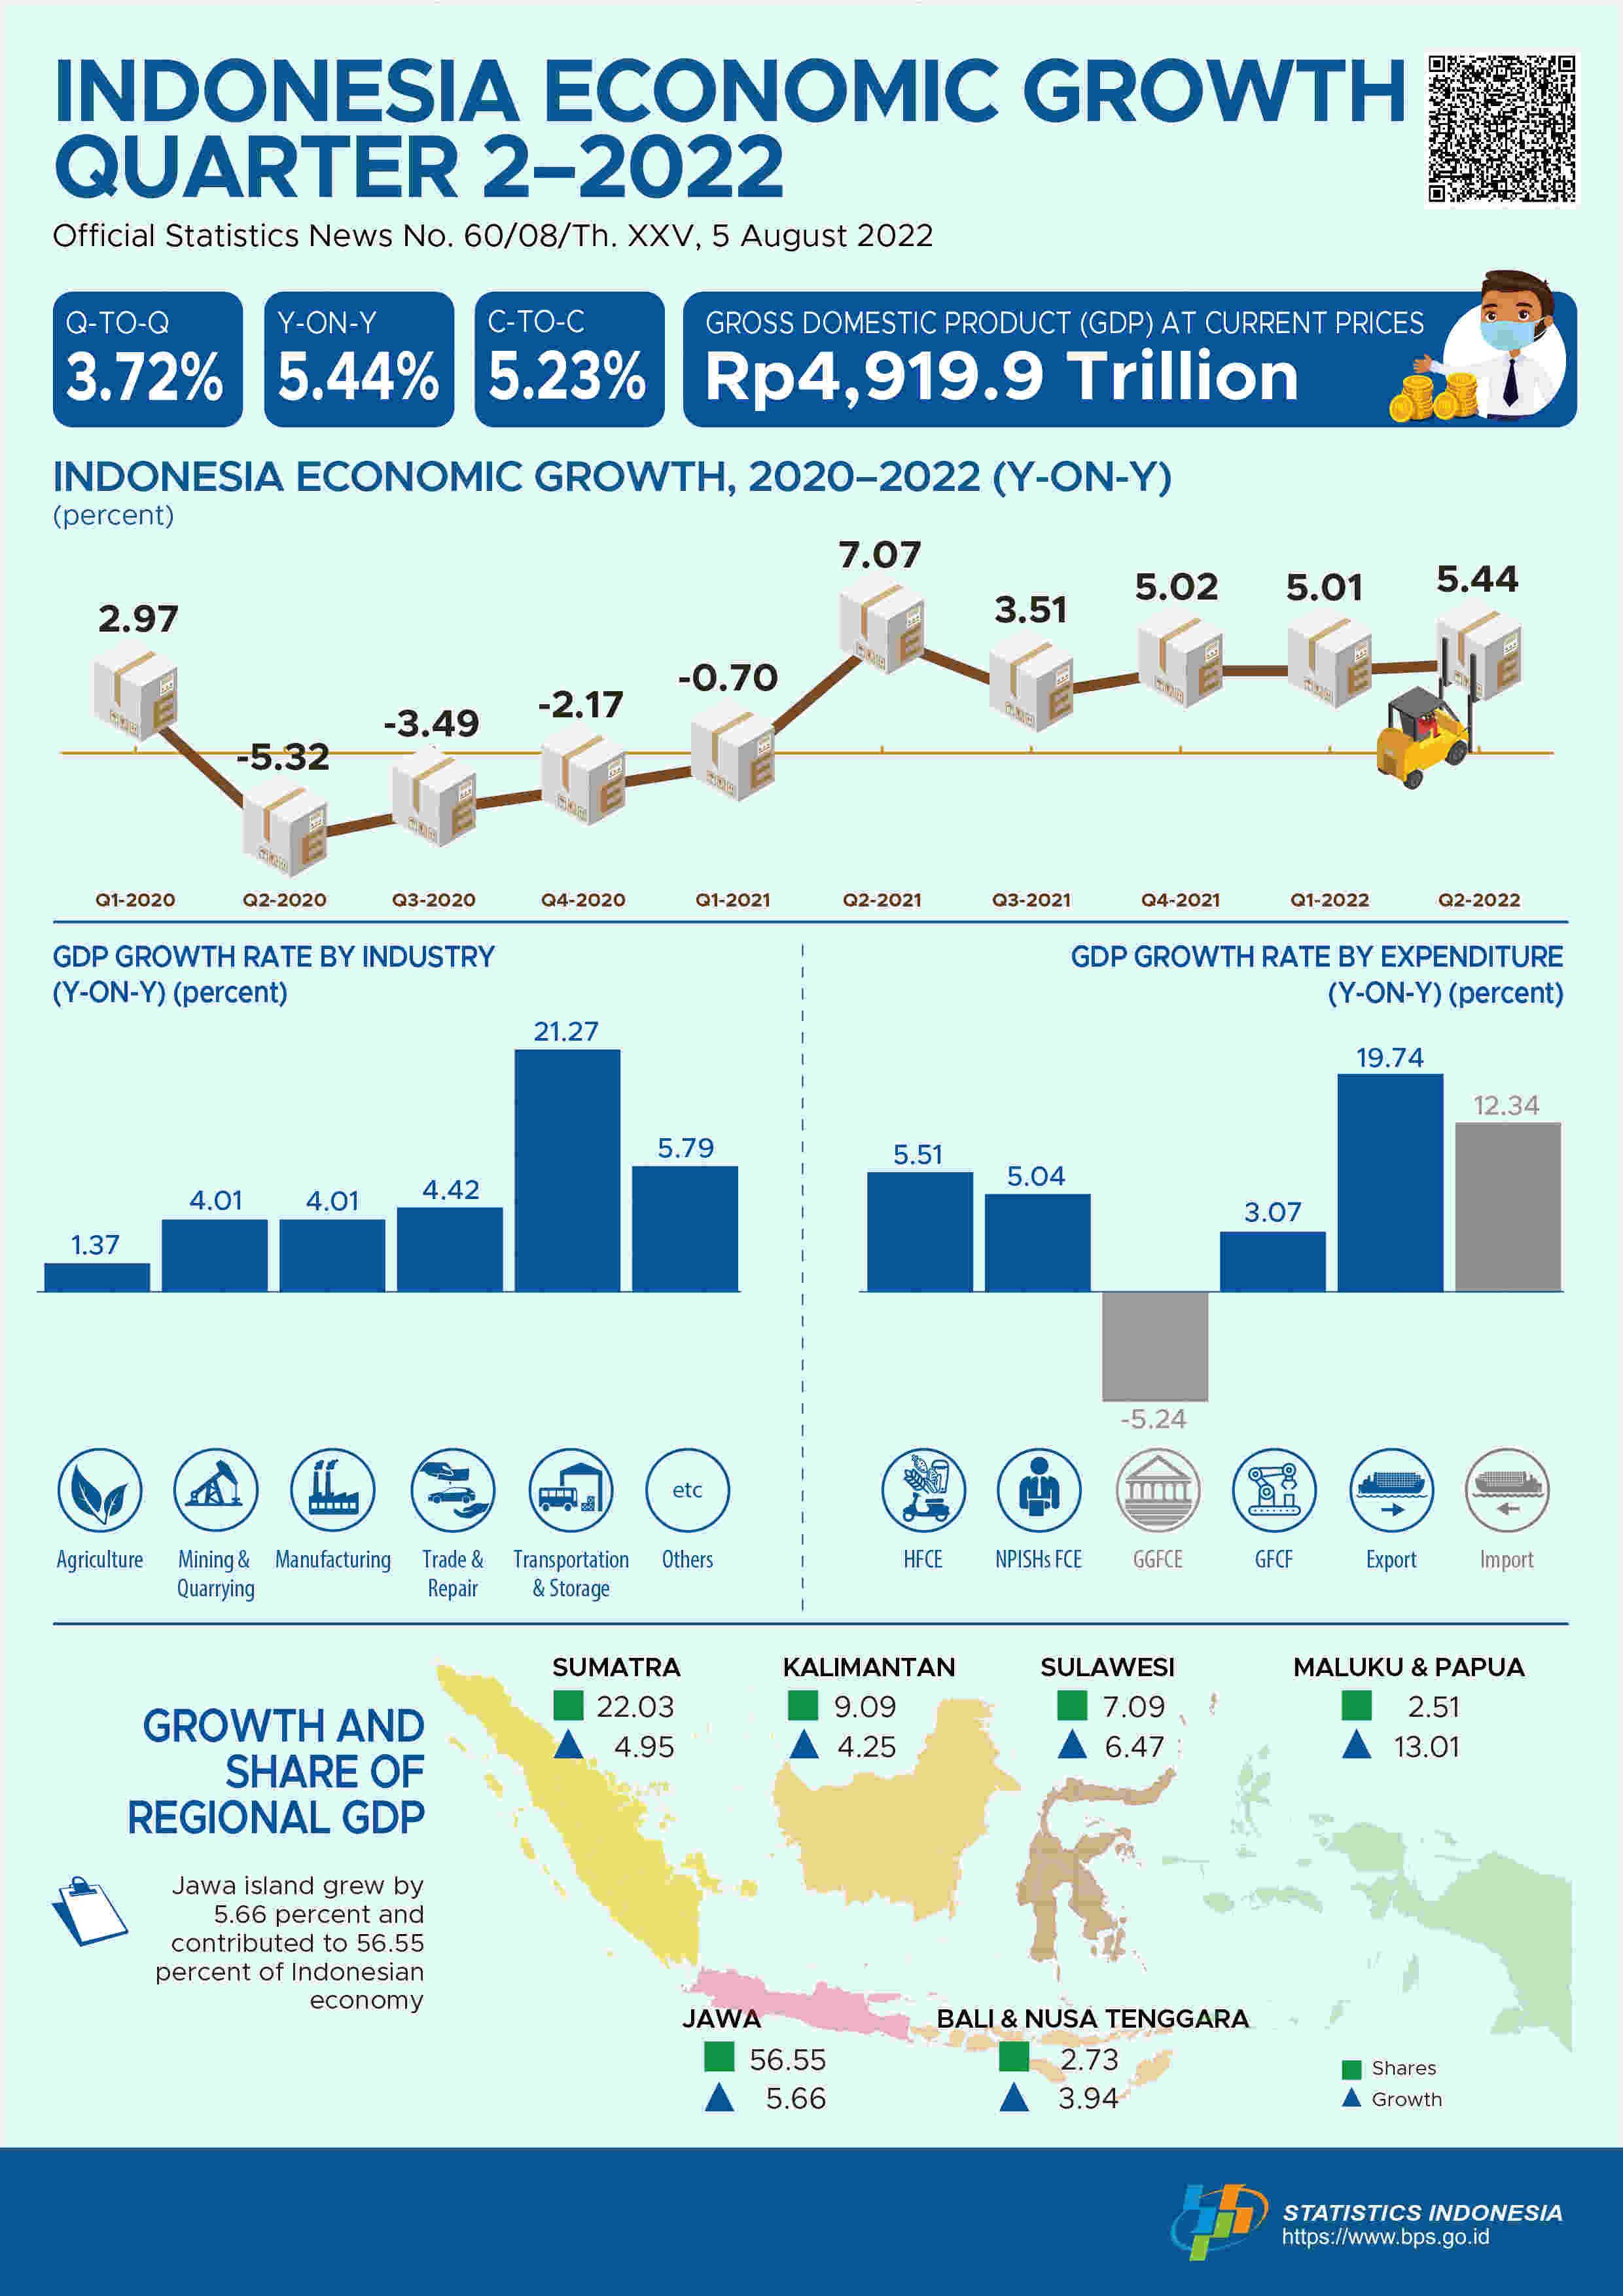 Indonesia’s Economic in Q2-2022 5.44 Percent (Y-on-Y)